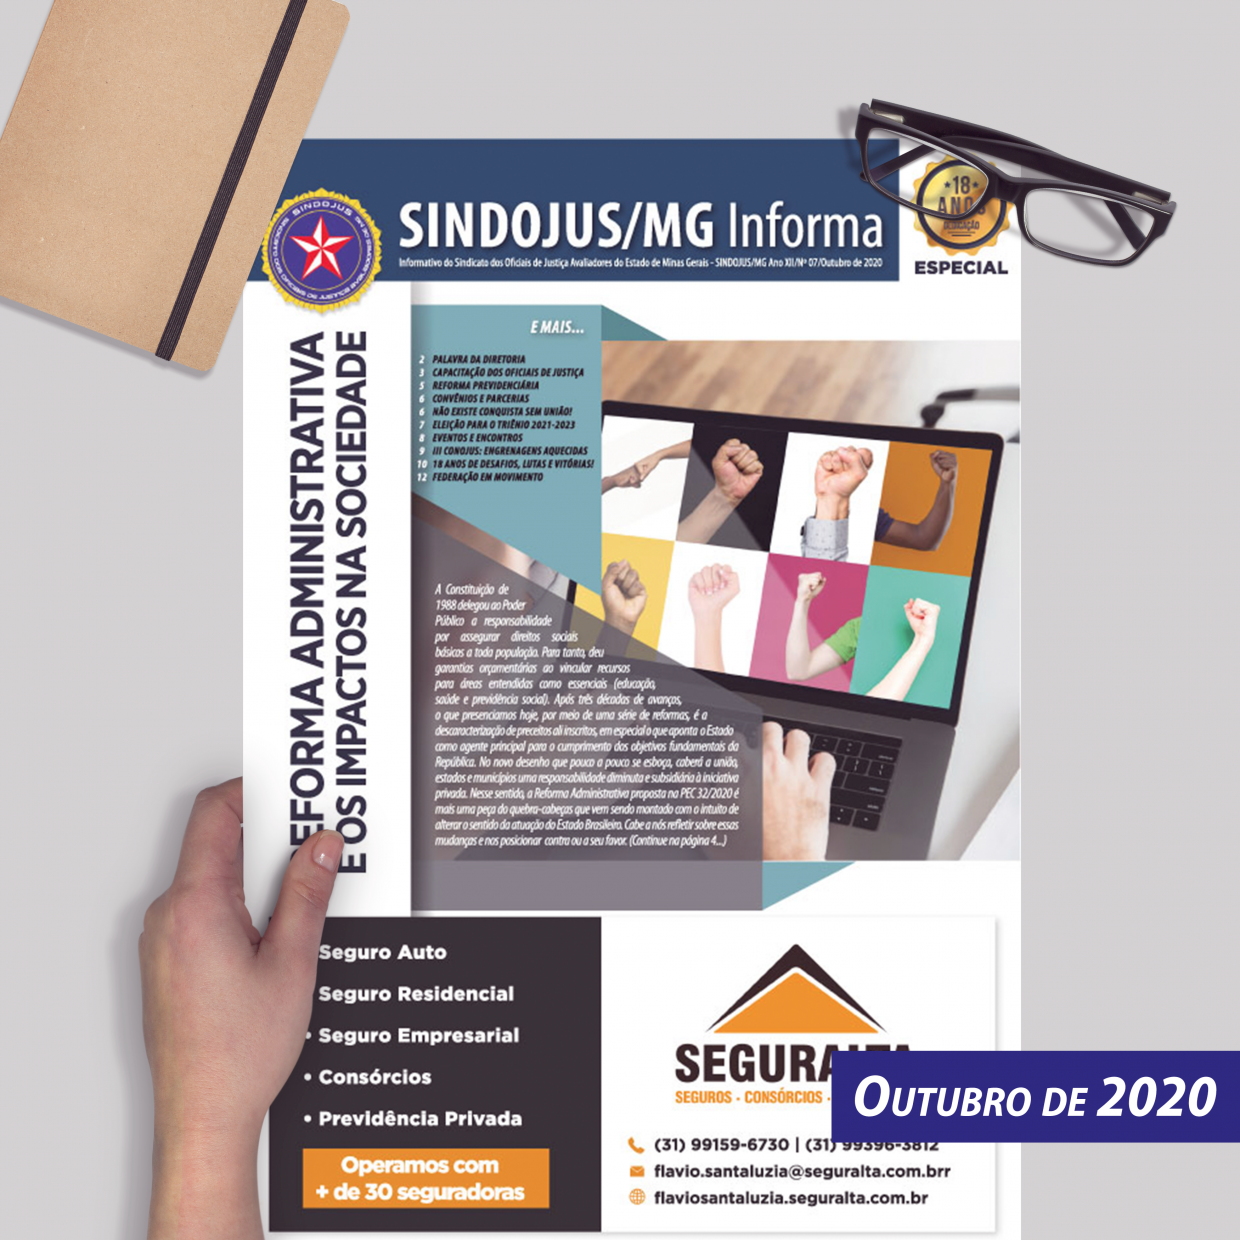 Informativo SINDOJUS/MG 10/2020